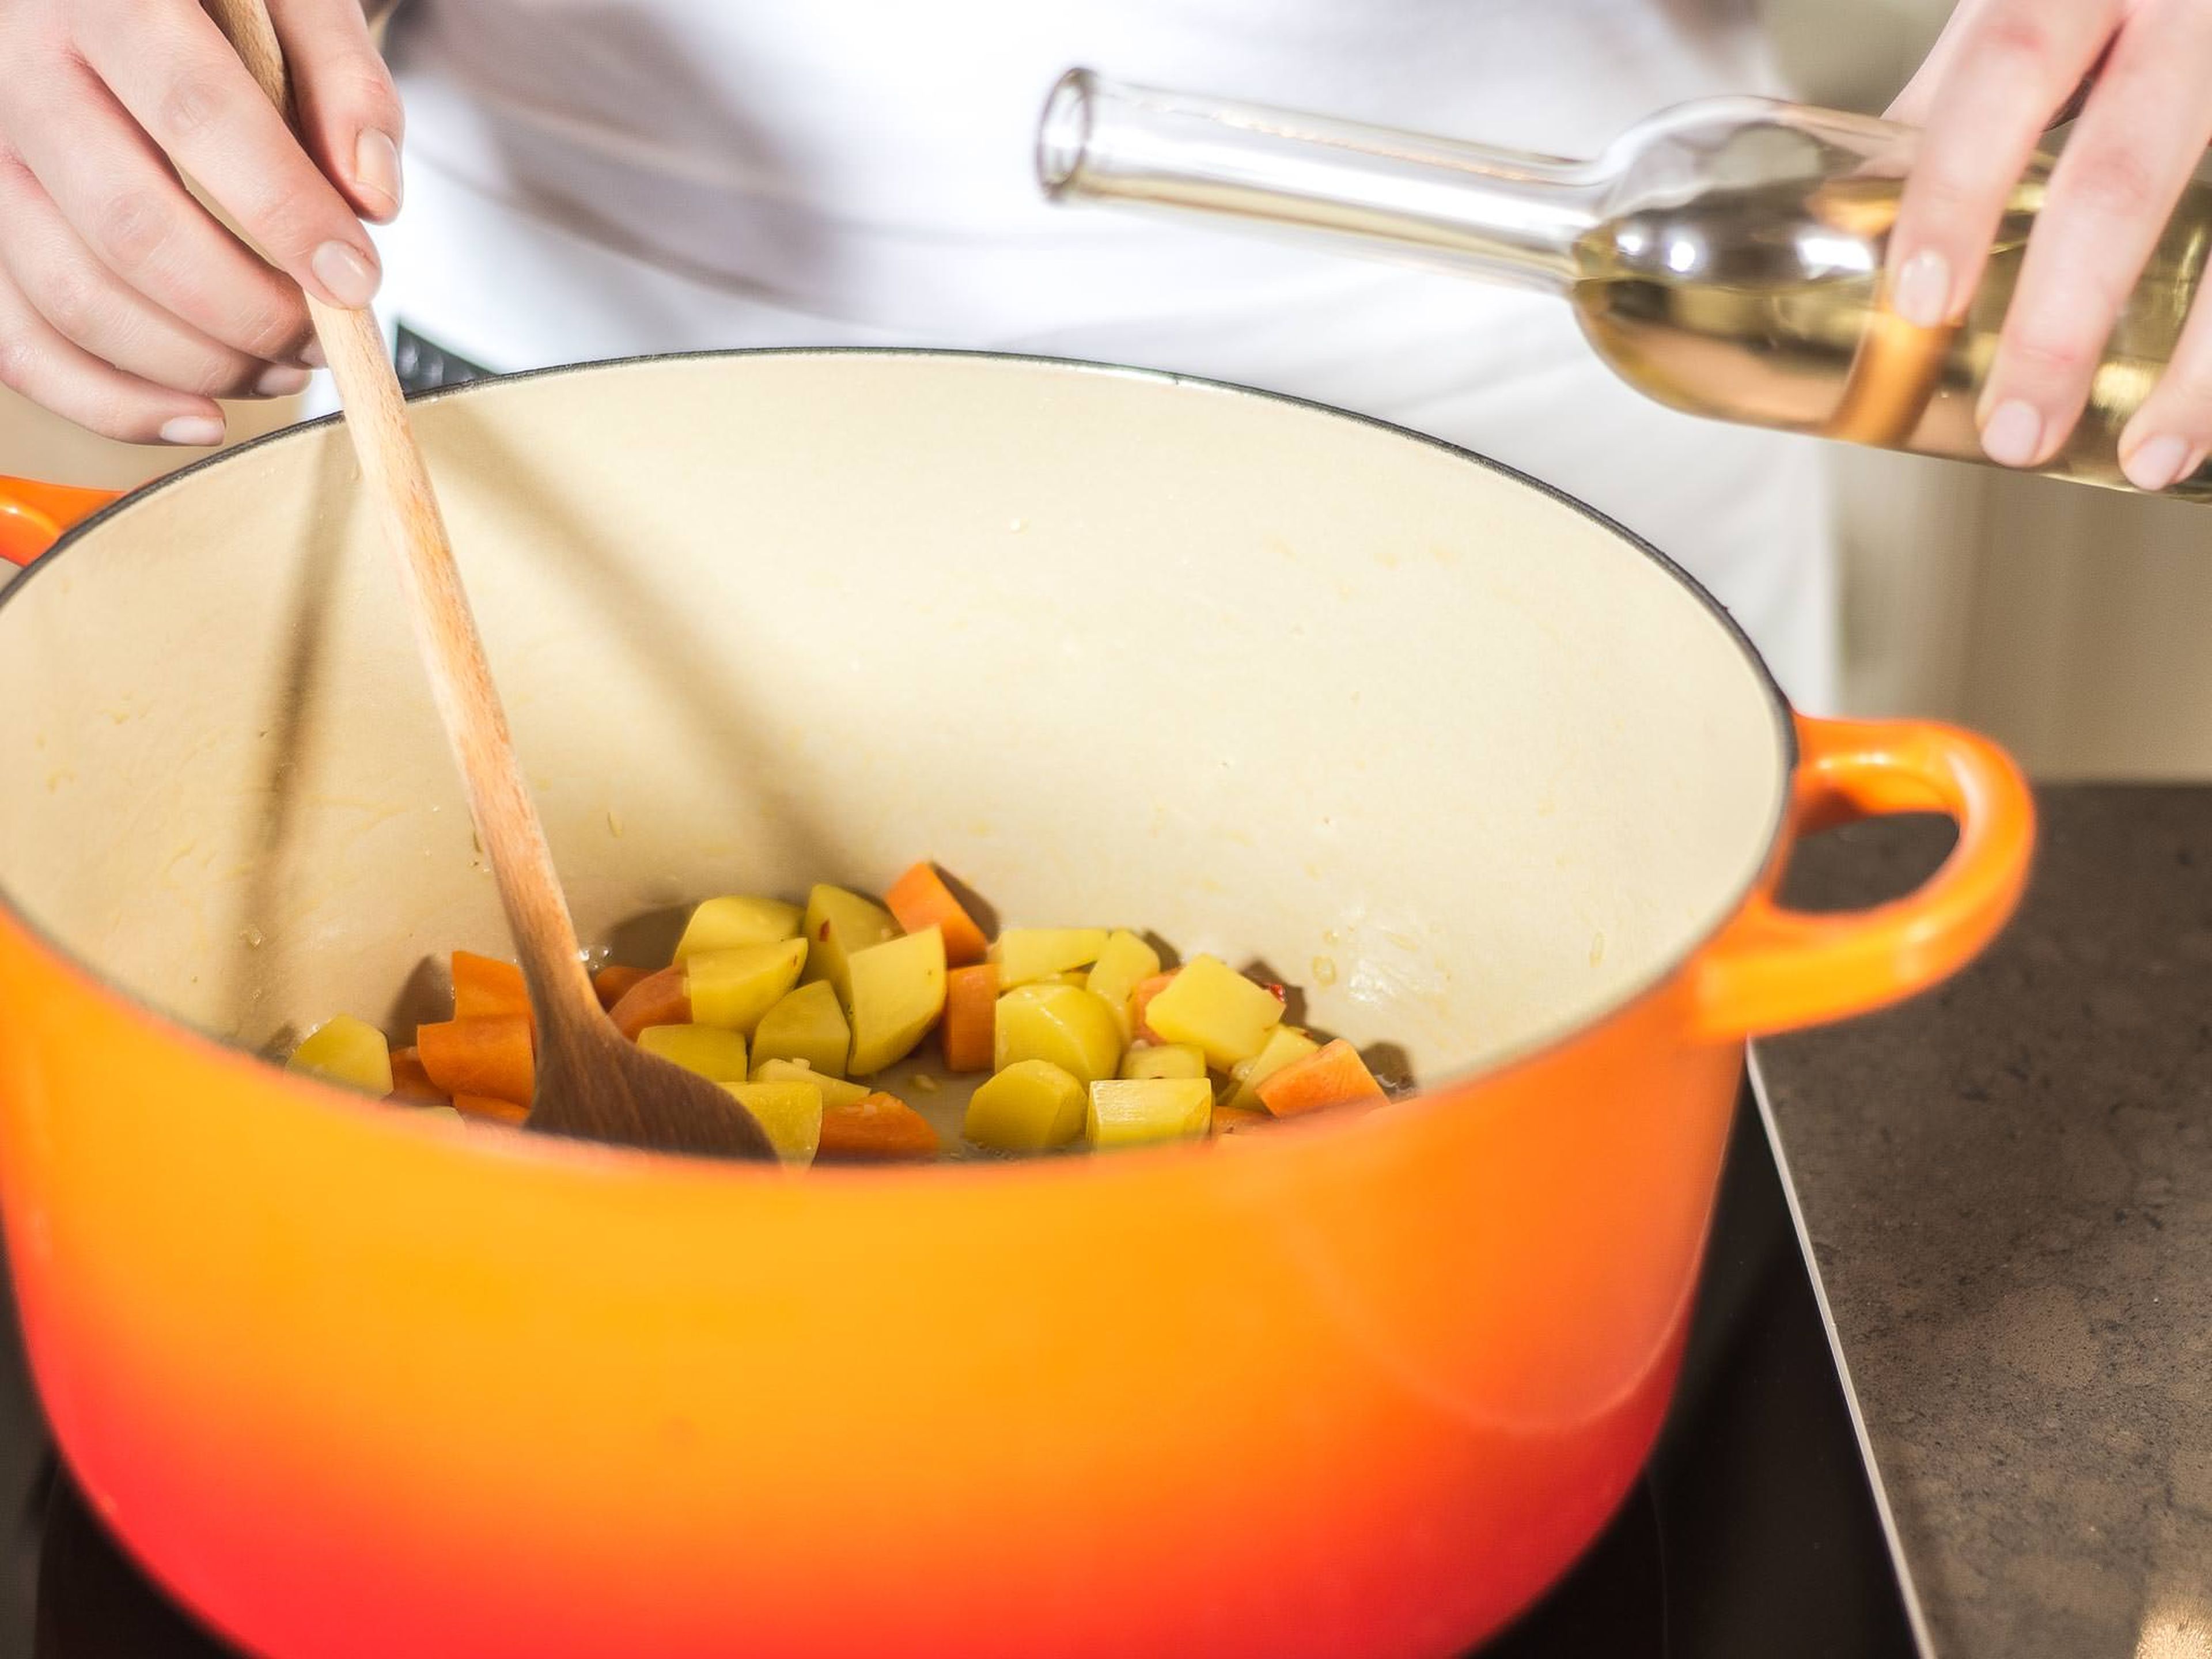 Sauté garlic, chili, onion, potatoes, leek, and carrot in olive oil over medium heat. Deglaze pan with white balsamic vinegar.